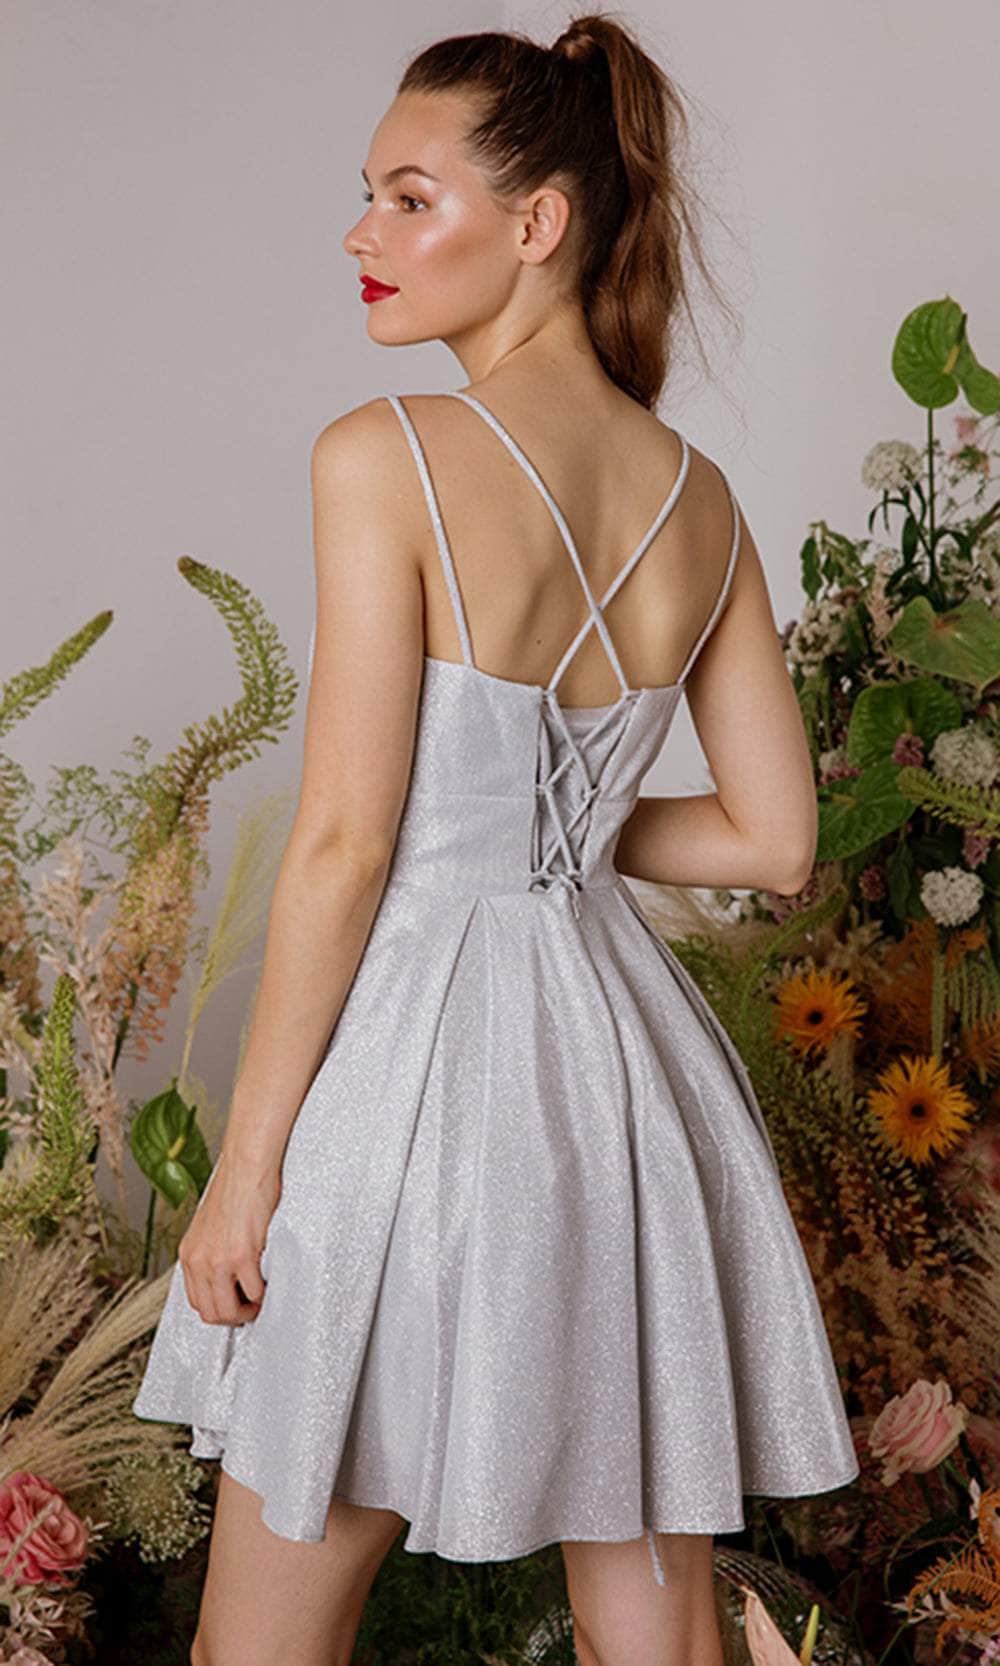 Eureka Fashion 9988 - Dual Straps A-Line Cocktail Dress Prom Dresses